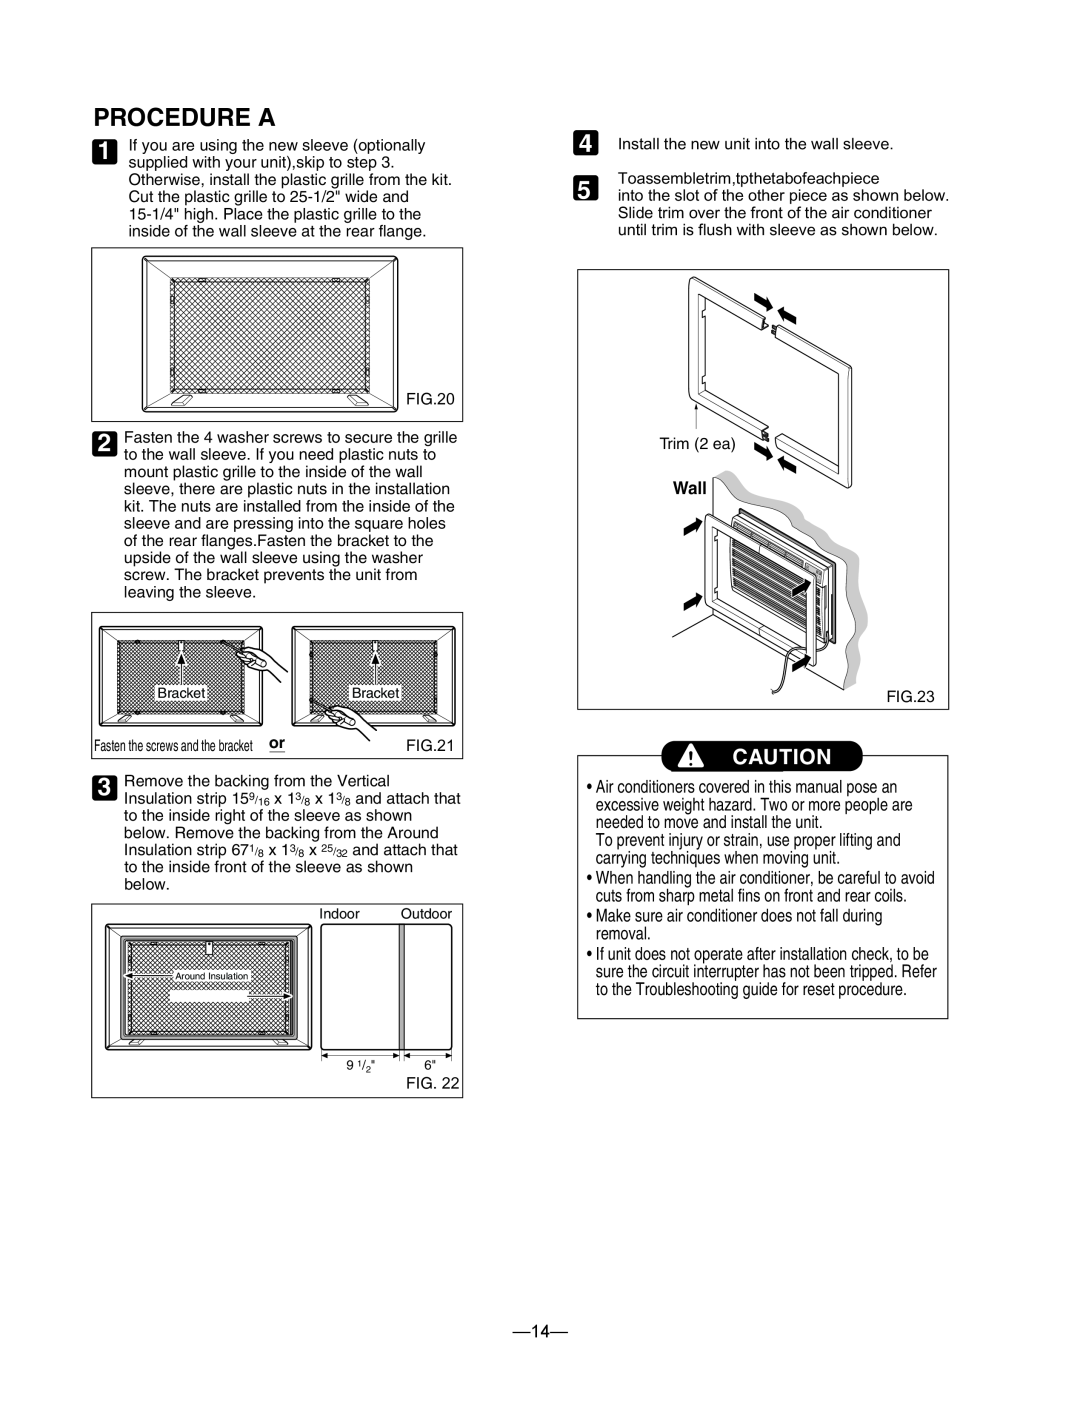 Heat Controller BG-101A, BG-81A, BG-123A service manual Procedure A, Wall 